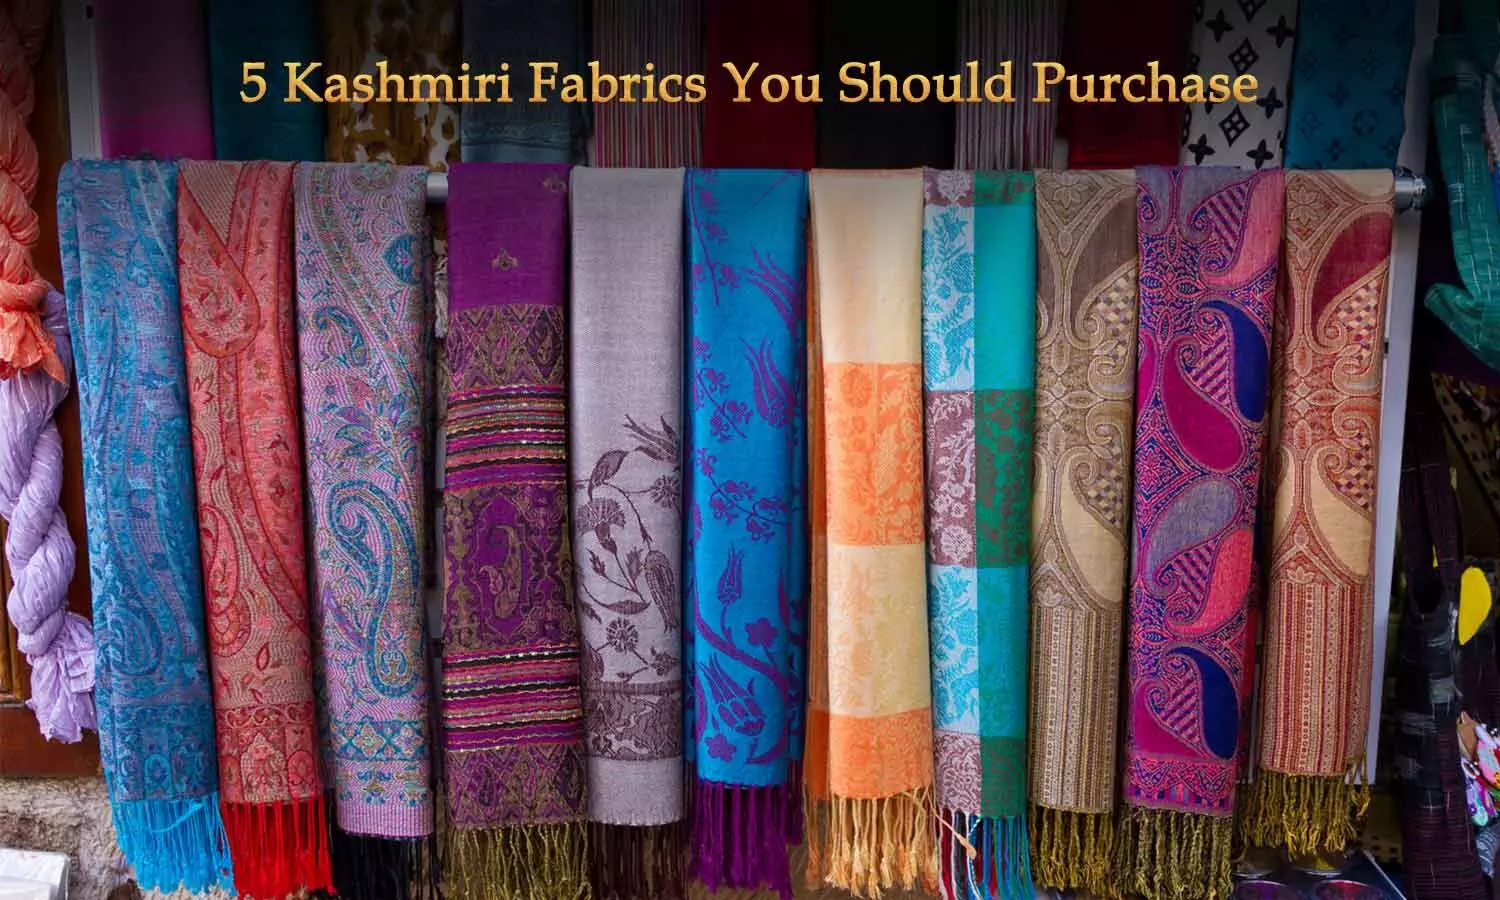 5 Kashmiri Fabrics You Should Purchase When Visiting Kashmir